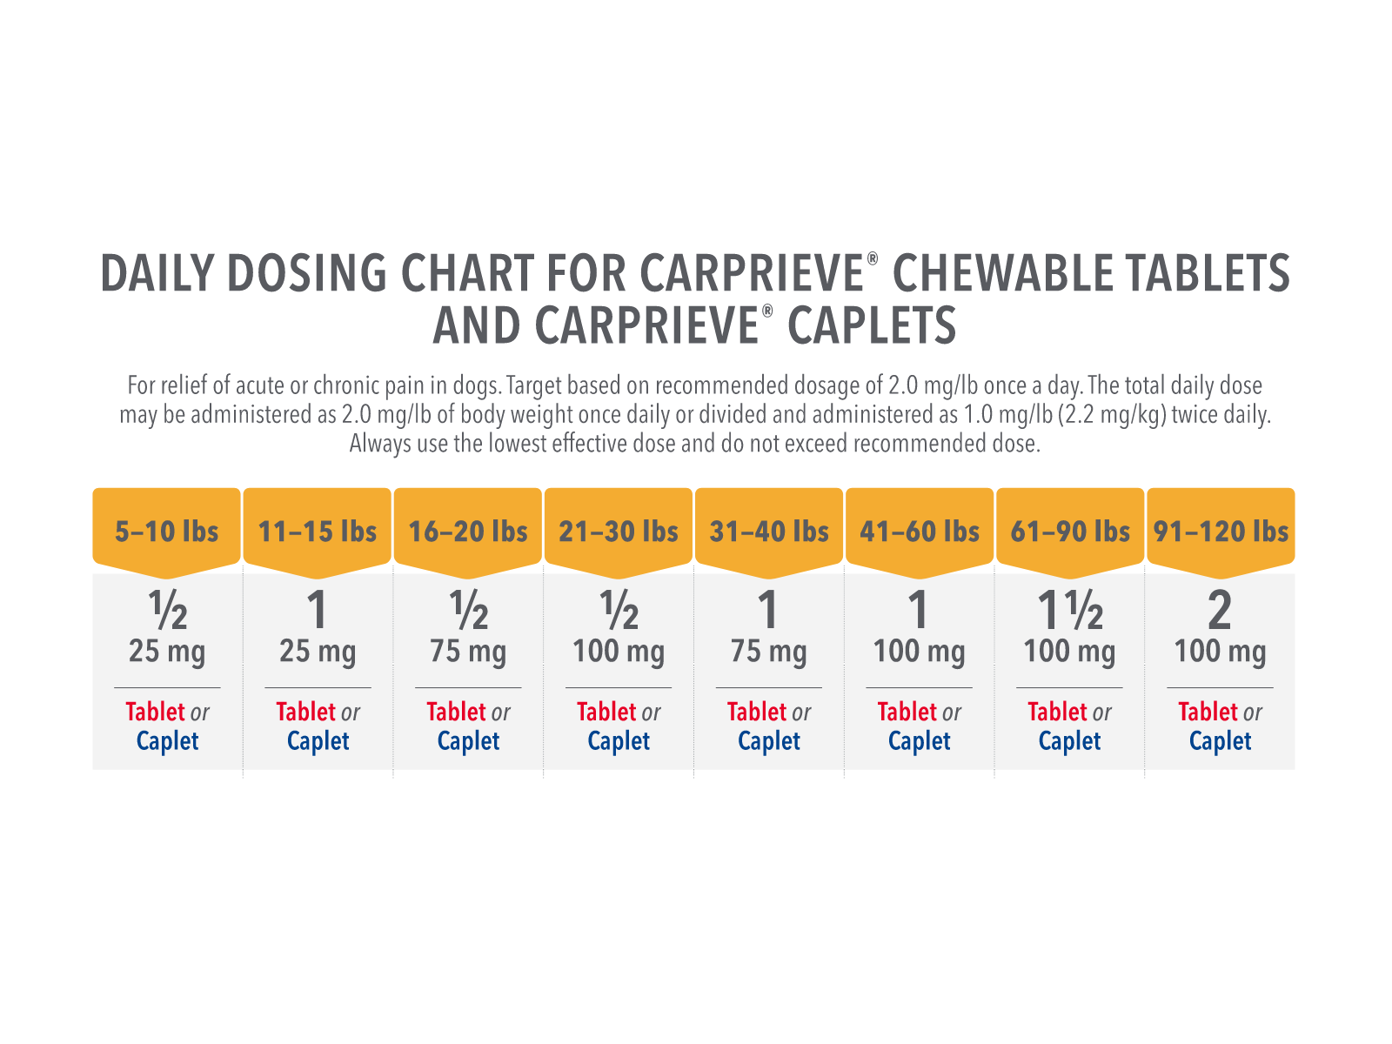 Carprieve Chewables Dosing Guide